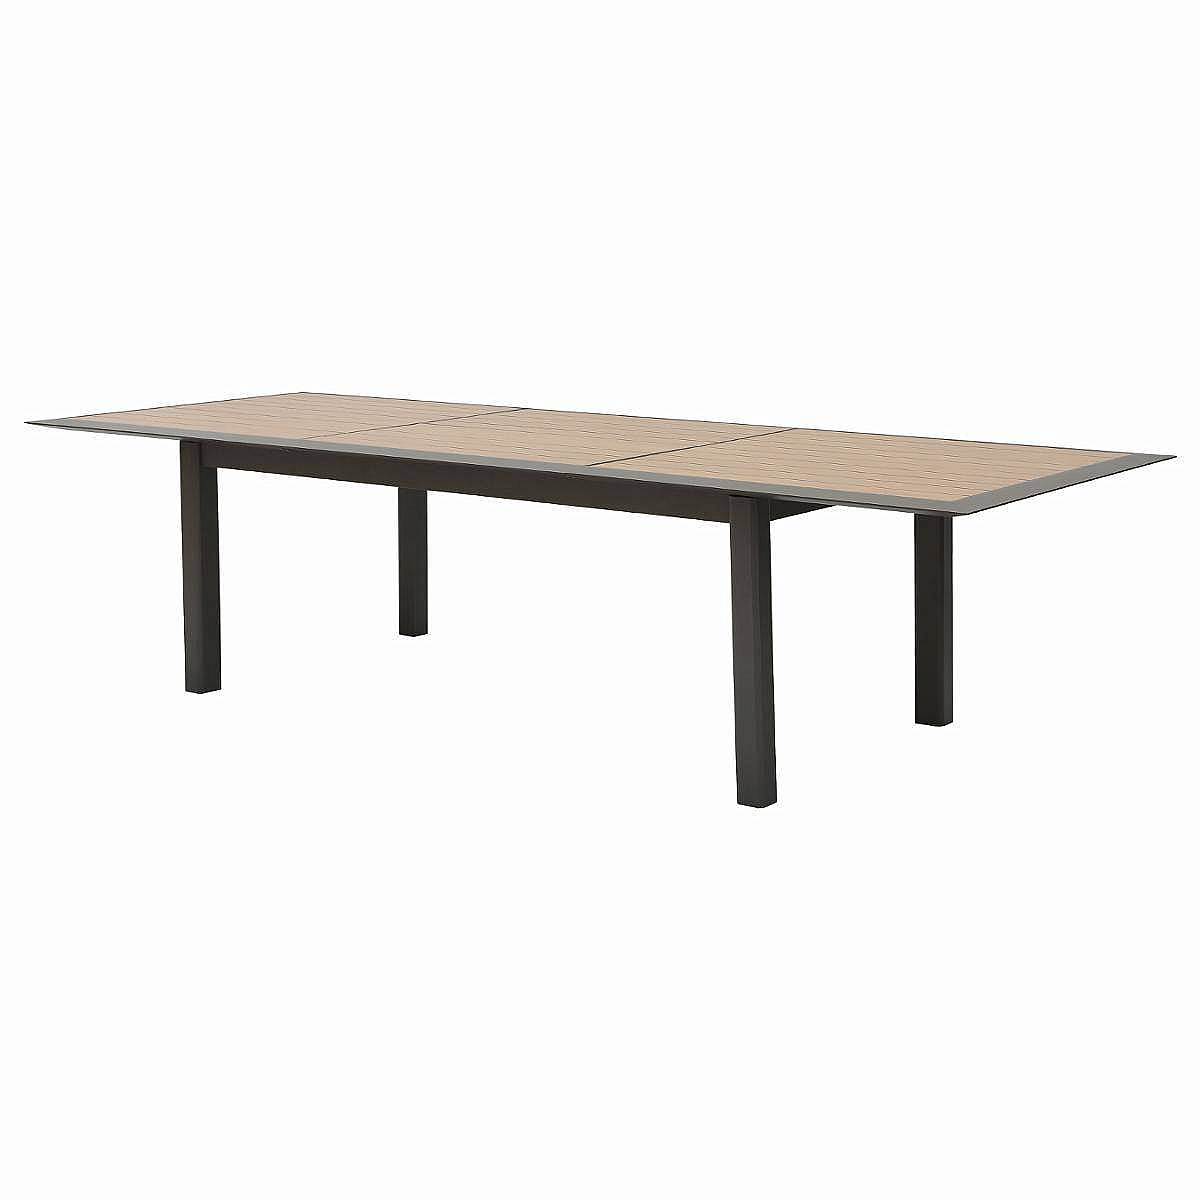 DEOKORK Hliníkový stůl VERMONT 216/316 cm (šedo-hnědý/medová)